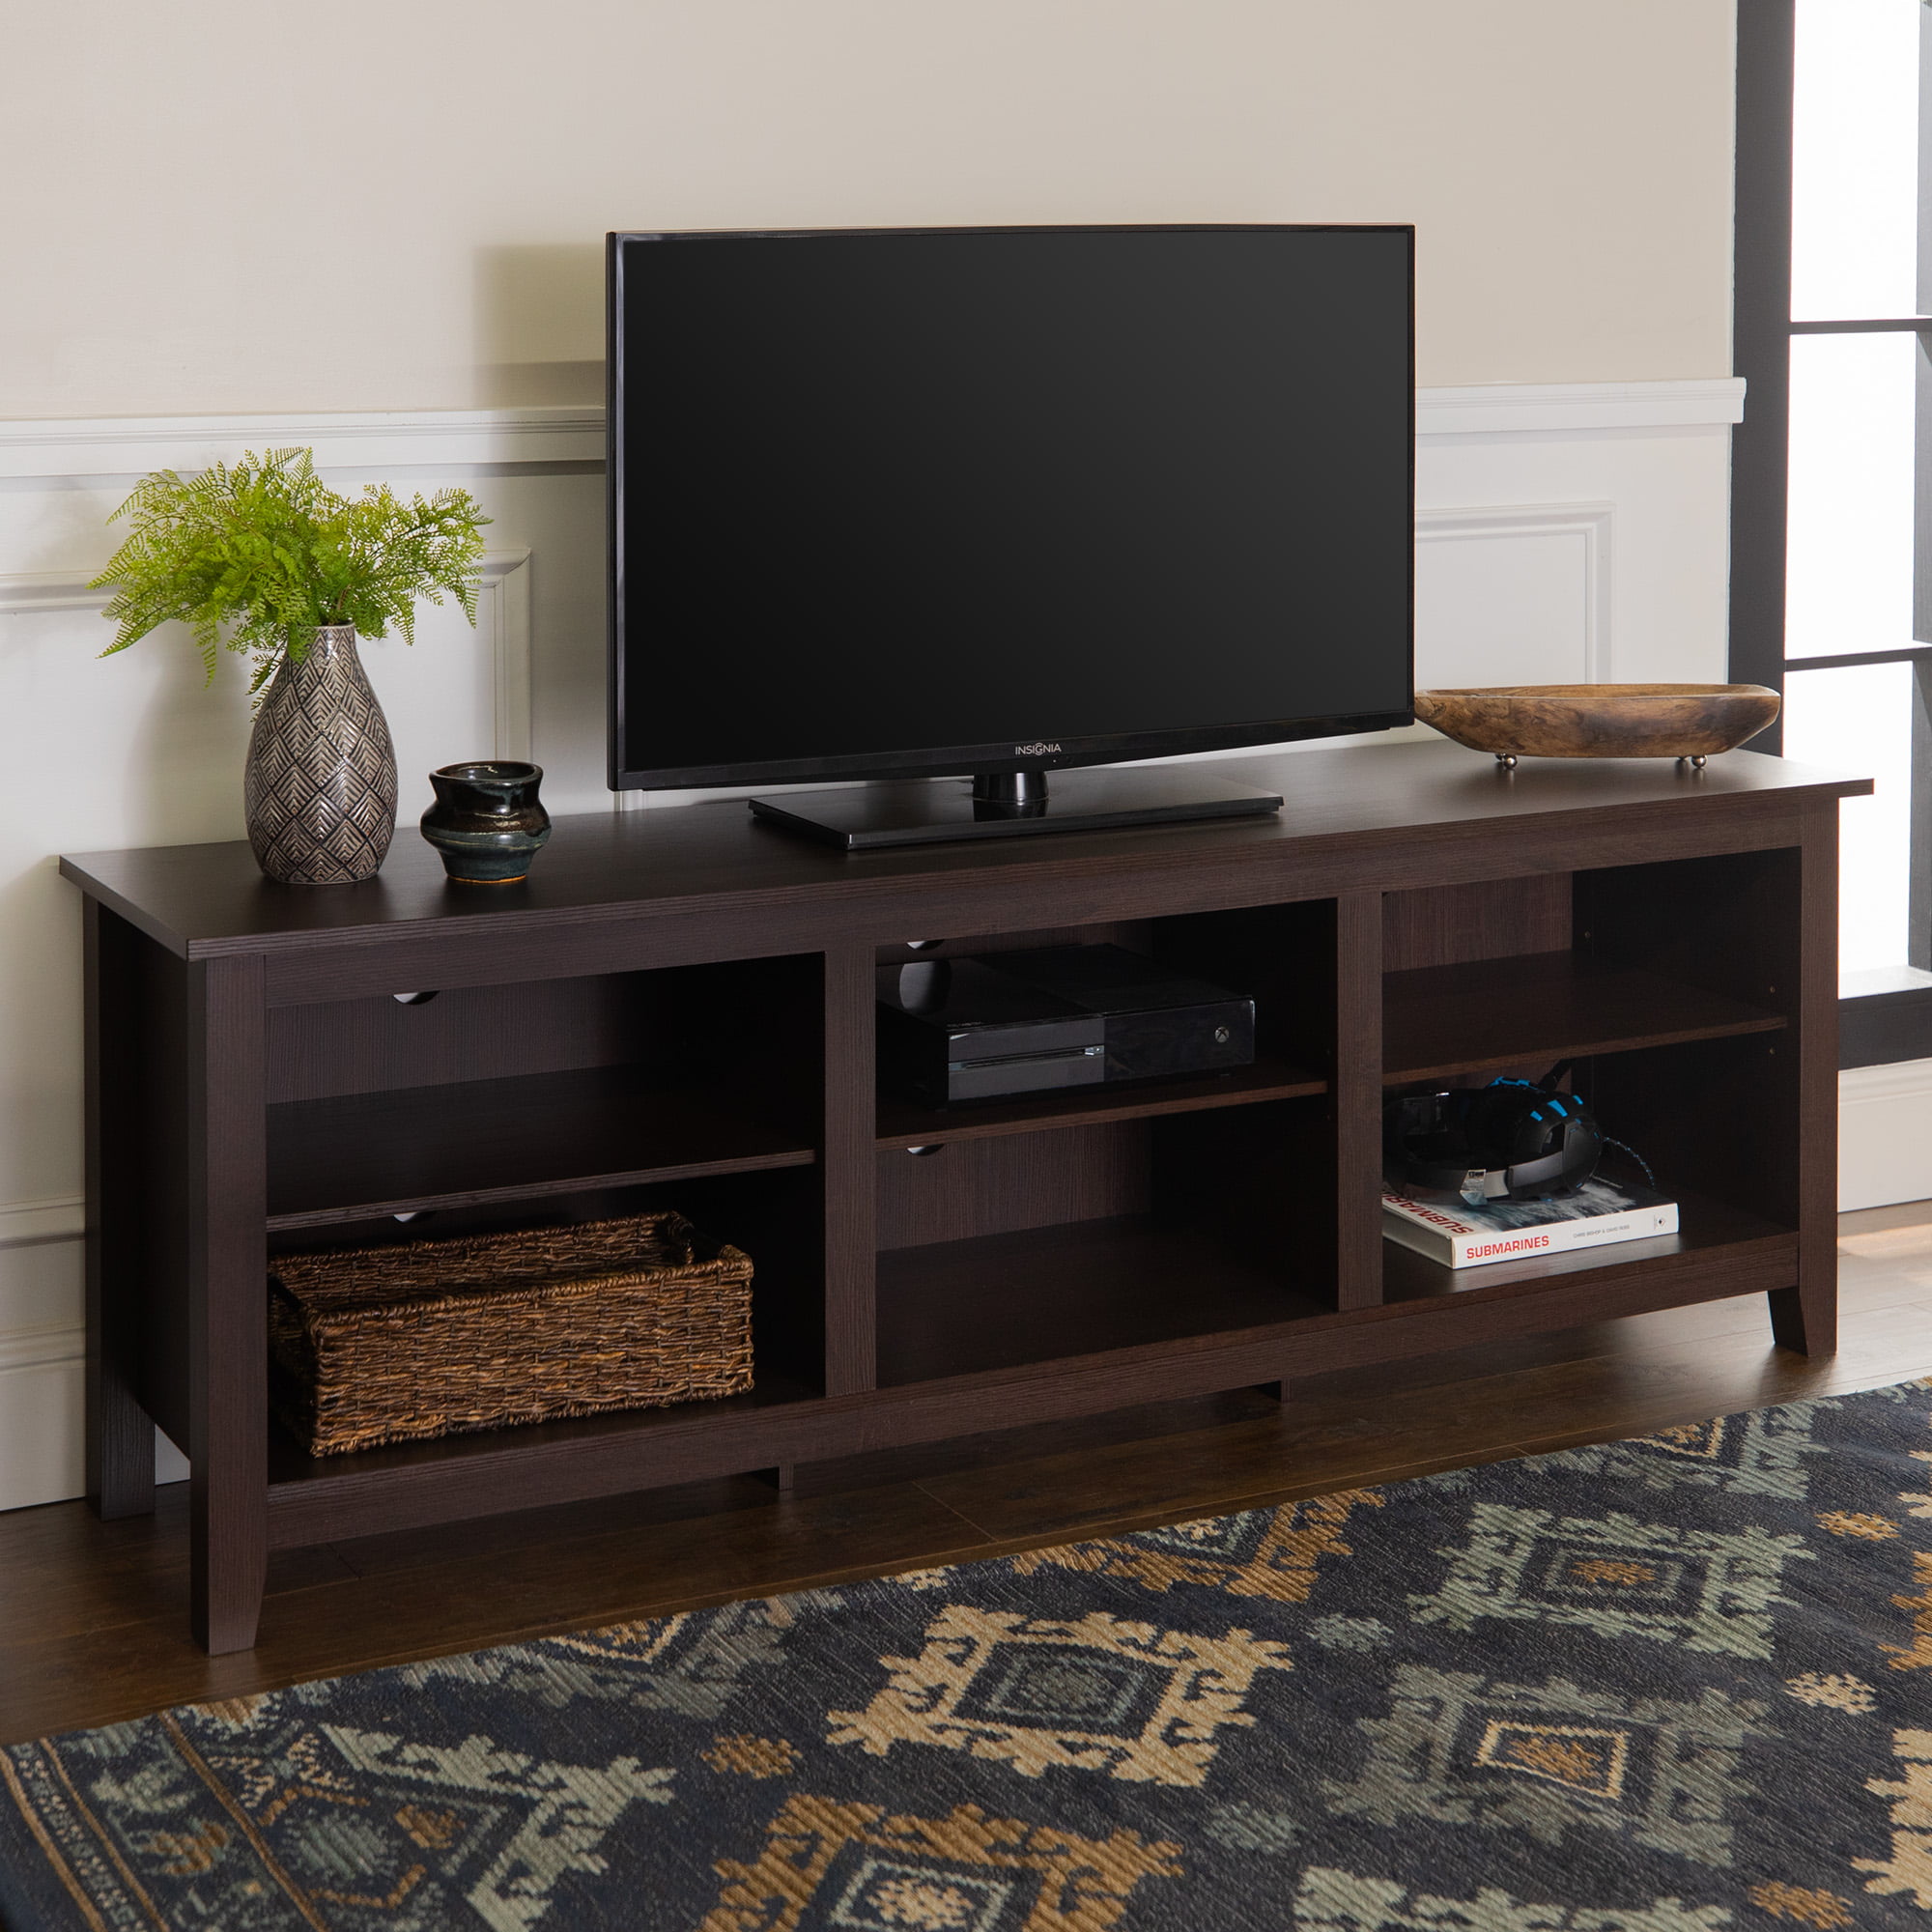 Wood 42" TV Stand Entertainment Espresso Furniture Center Organizer Living Room 